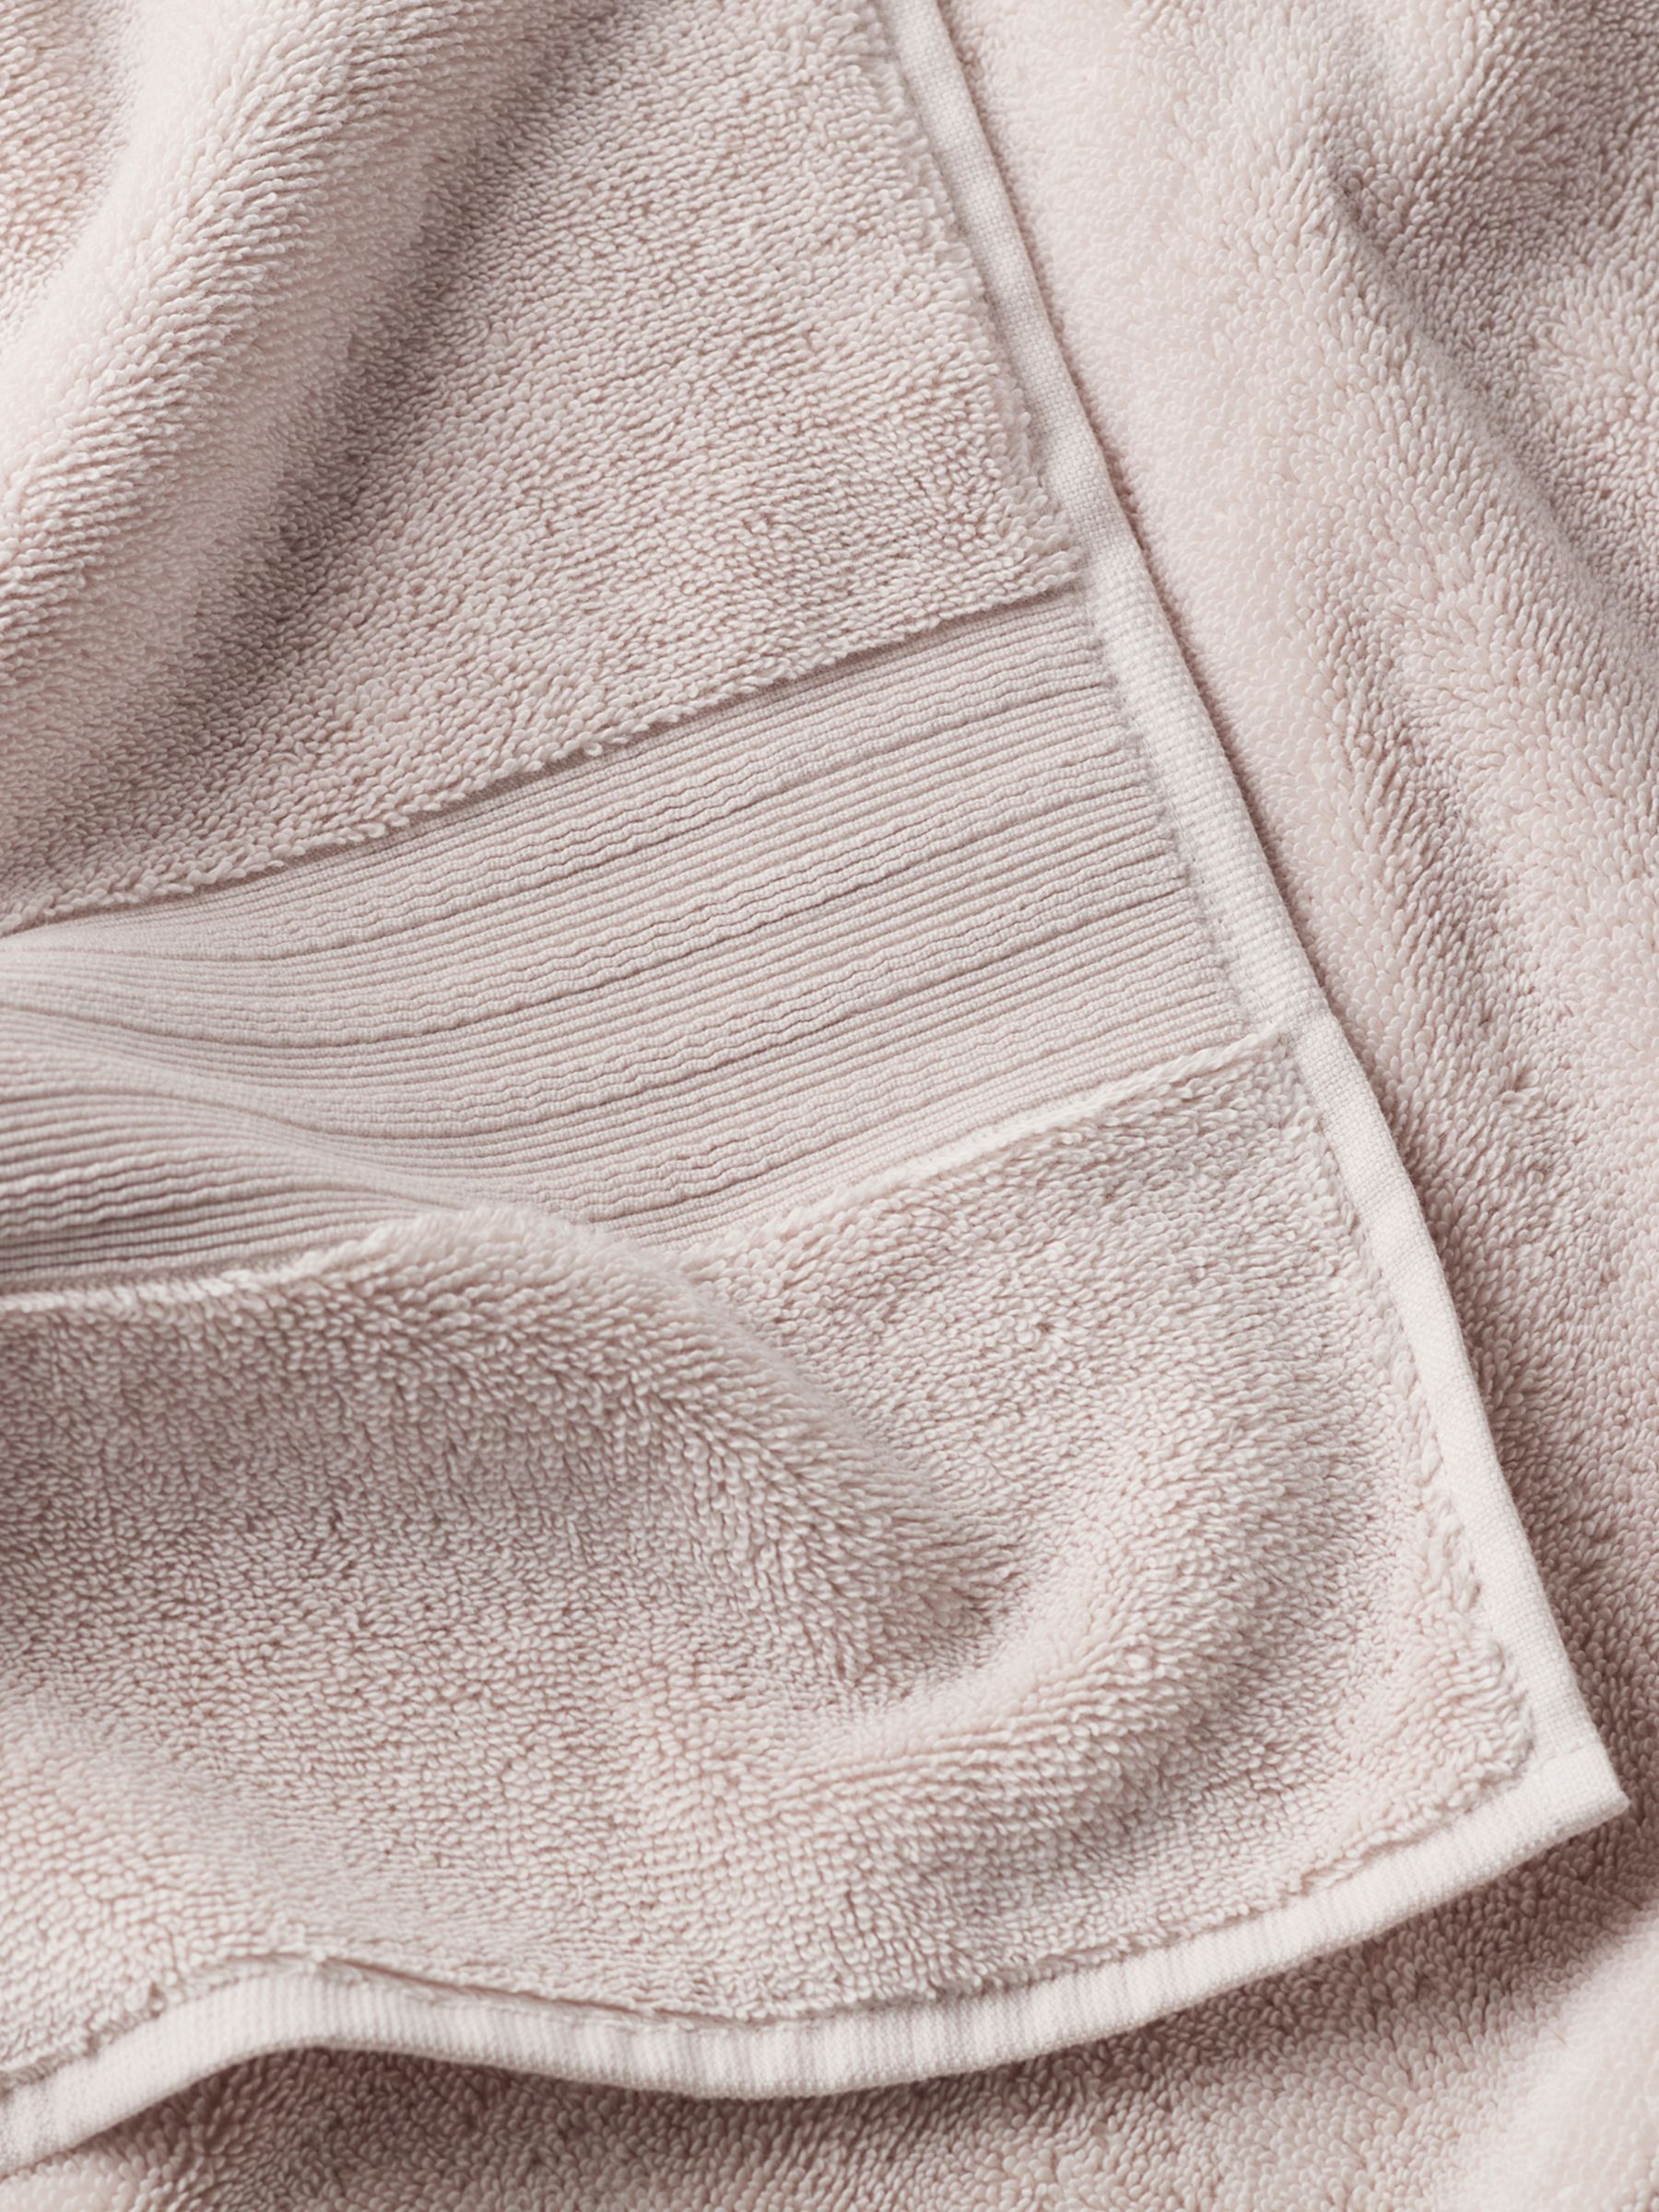 Bedfolk Plush Cotton Face Cloth, Rose